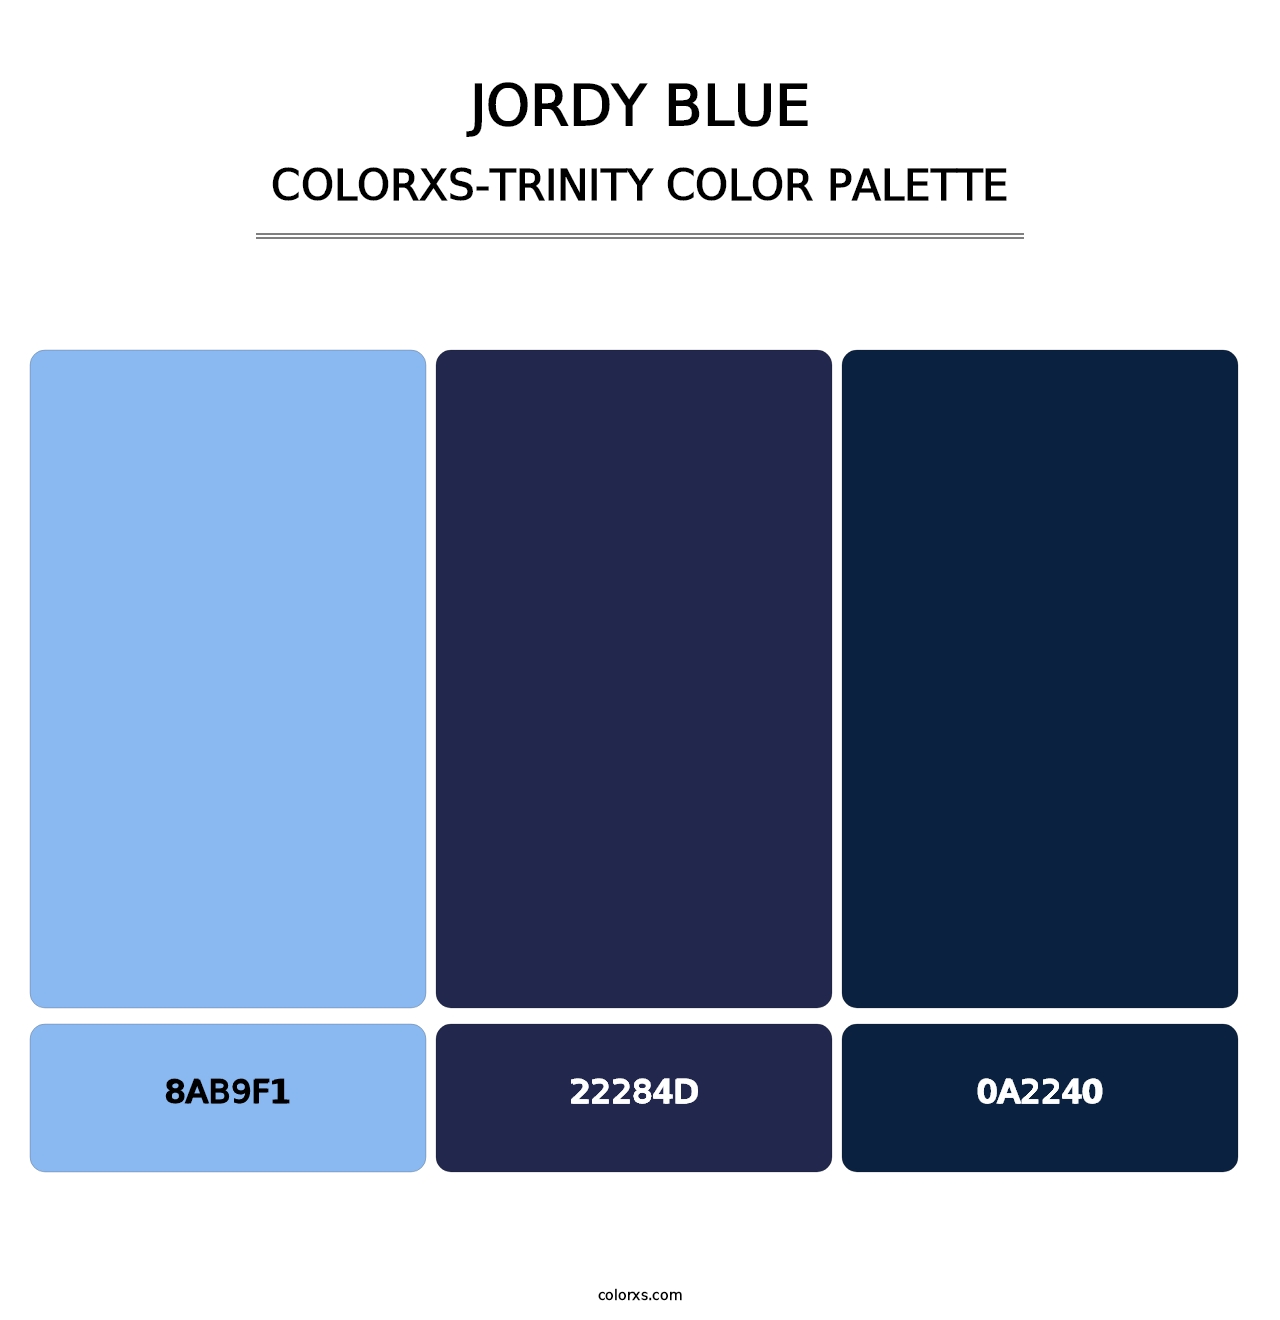 Jordy Blue - Colorxs Trinity Palette